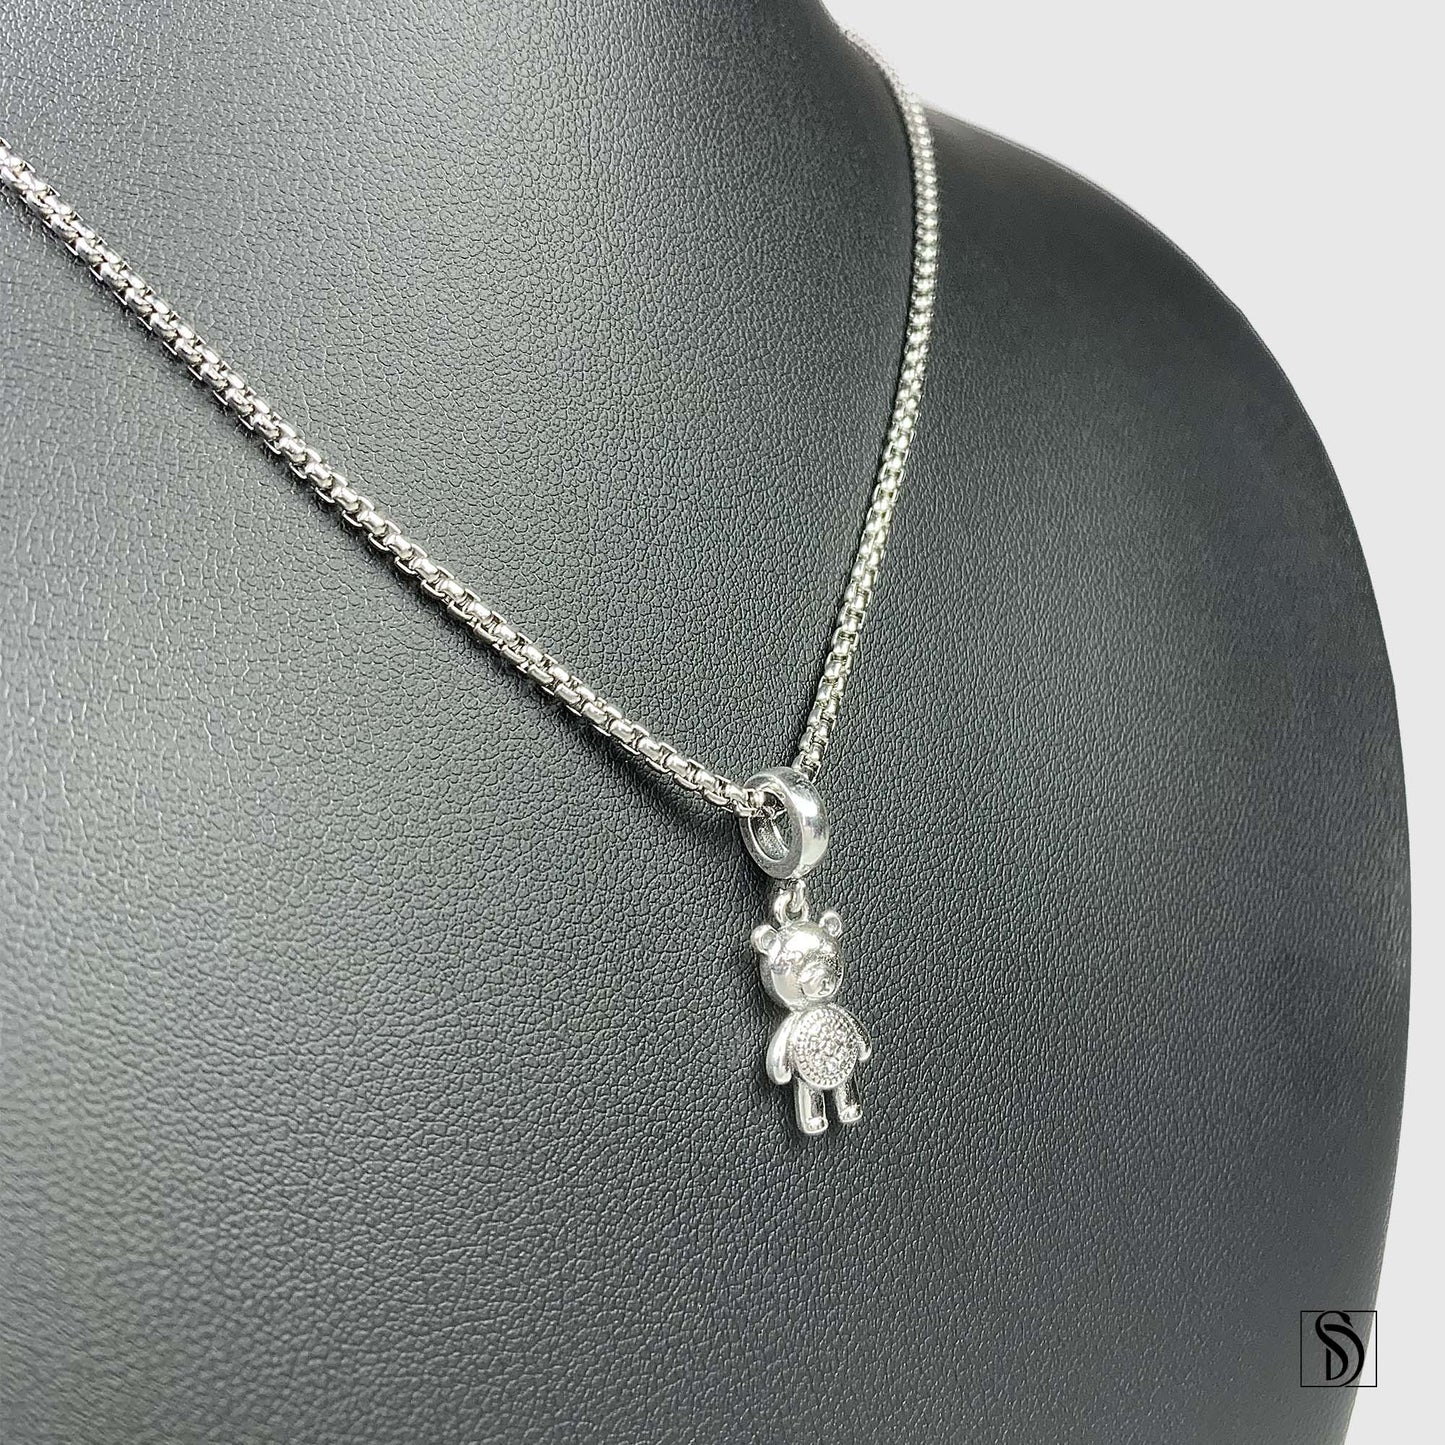 Silver Teddy Bear Pendant Necklace